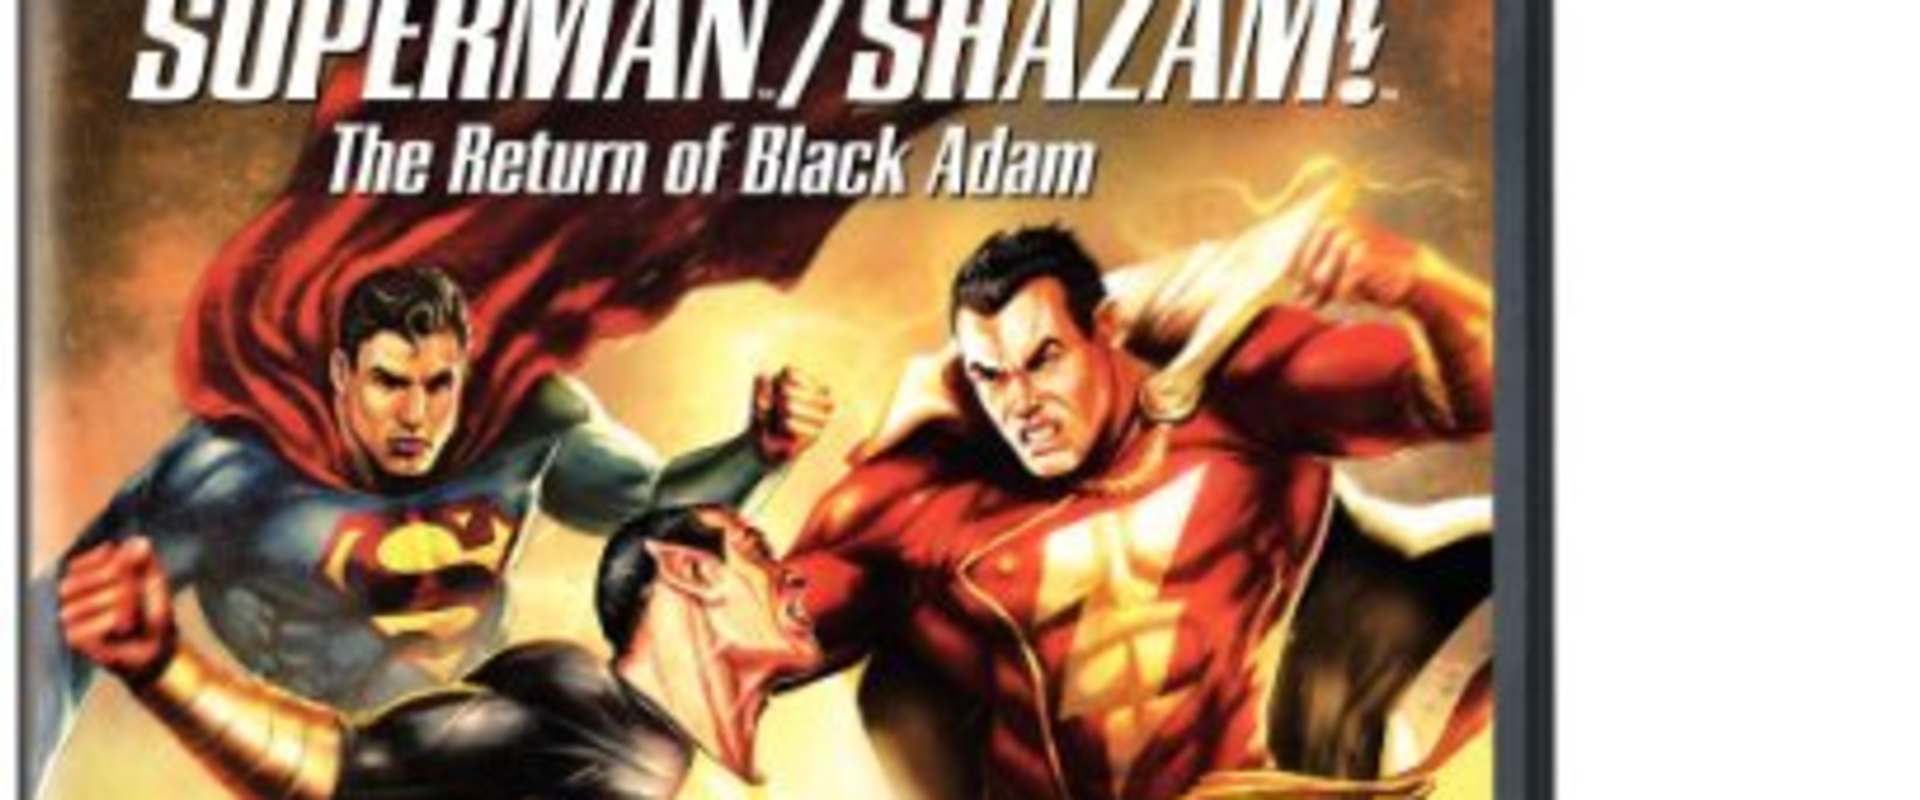 Superman/Shazam!: The Return of Black Adam background 1